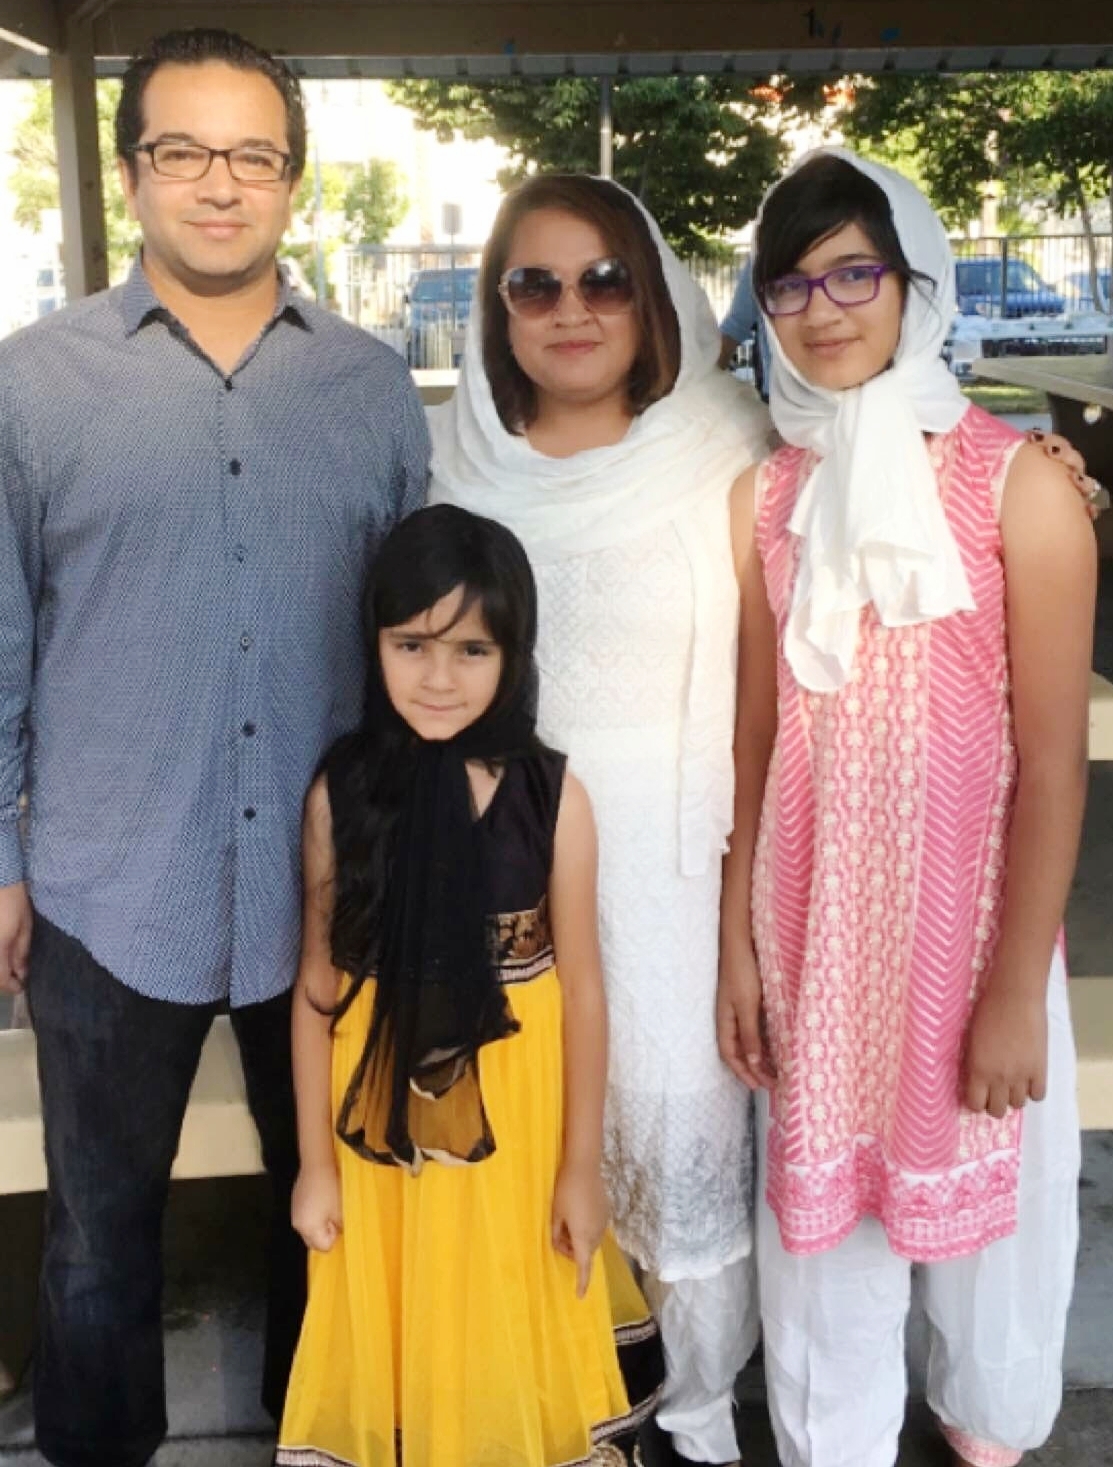 Photo: Awan Family | From L to R: Ali, Sophia, Sonia and Miriam Awan.